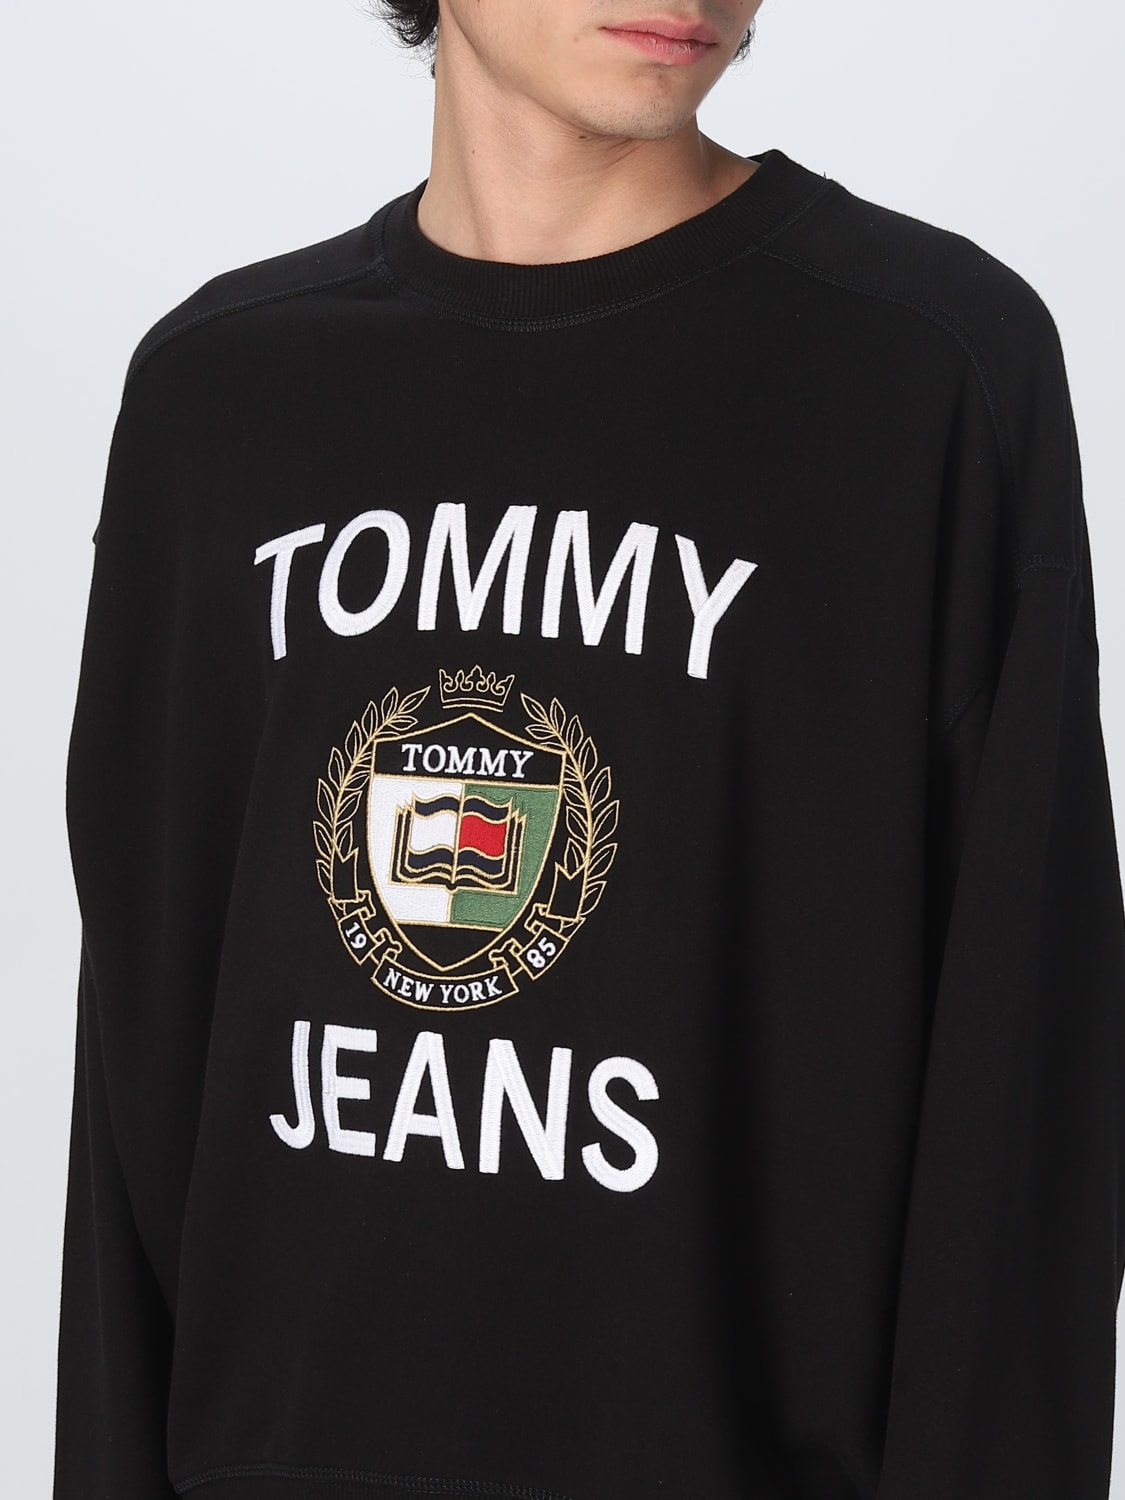 TOMMY JEANS: sweatshirt for man Black | Tommy Jeans sweatshirt DM0DM16376 online at GIGLIO.COM